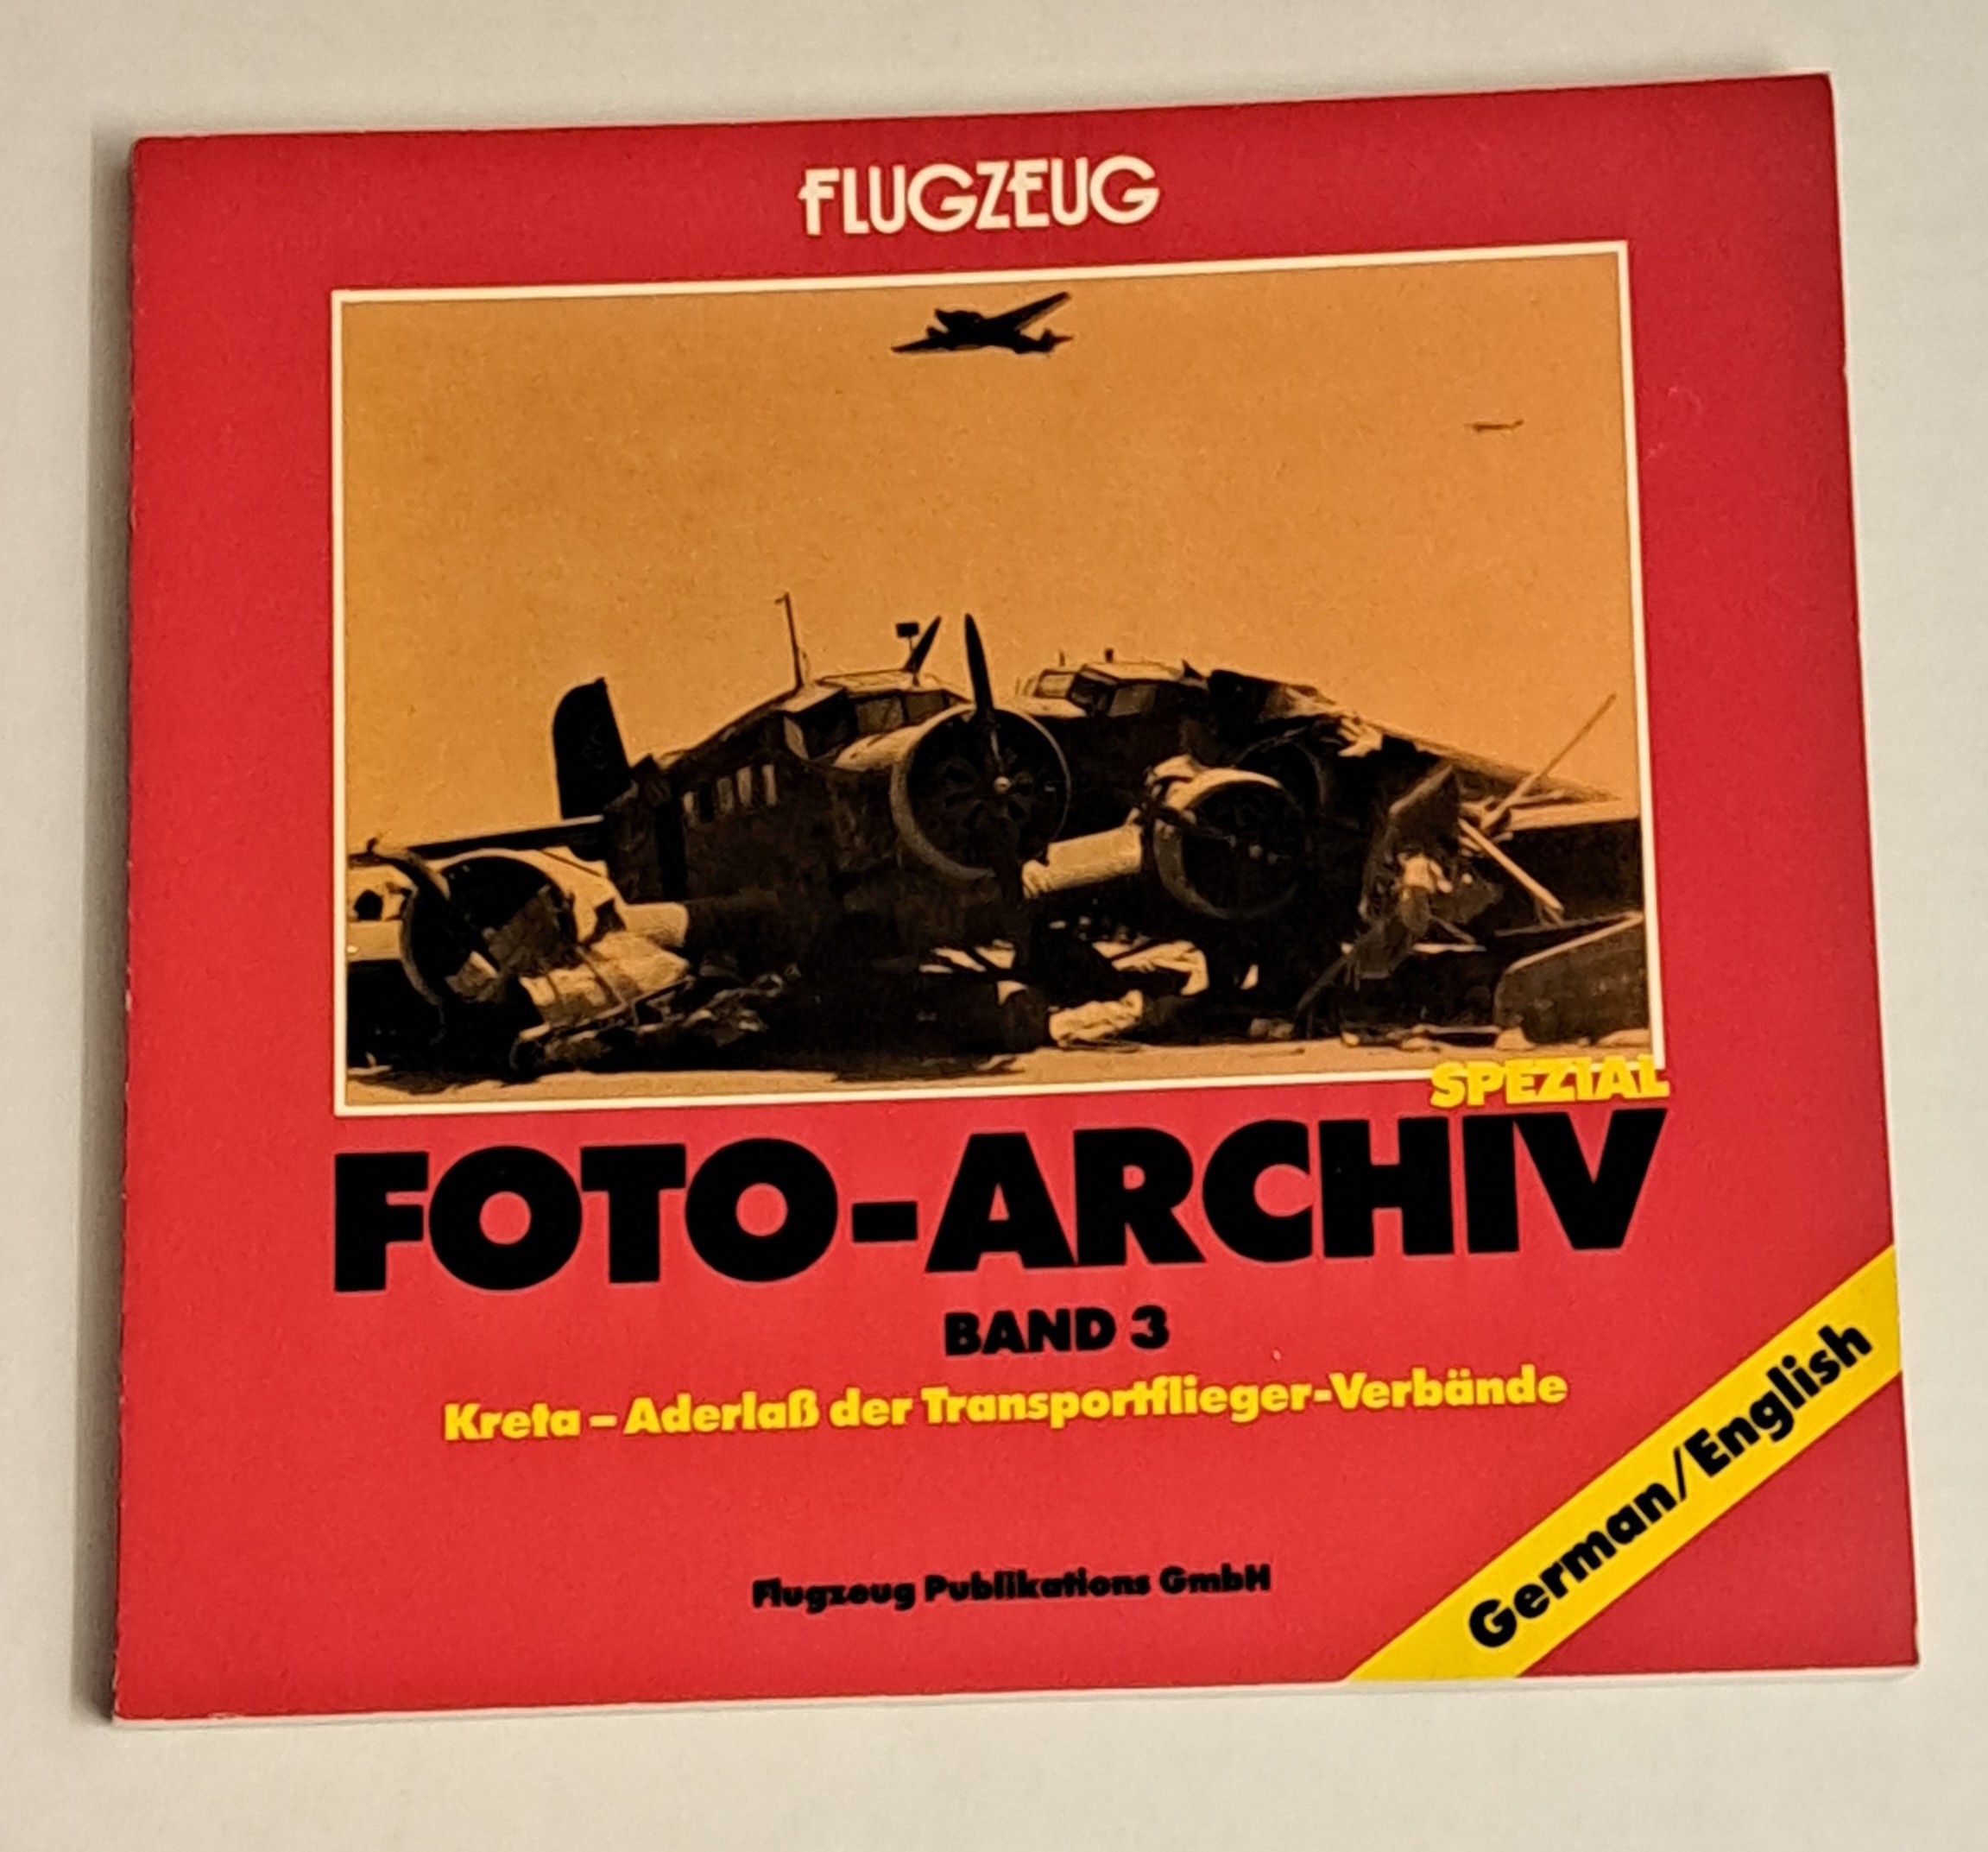 Foto-Archiv Band 3 (German/English)